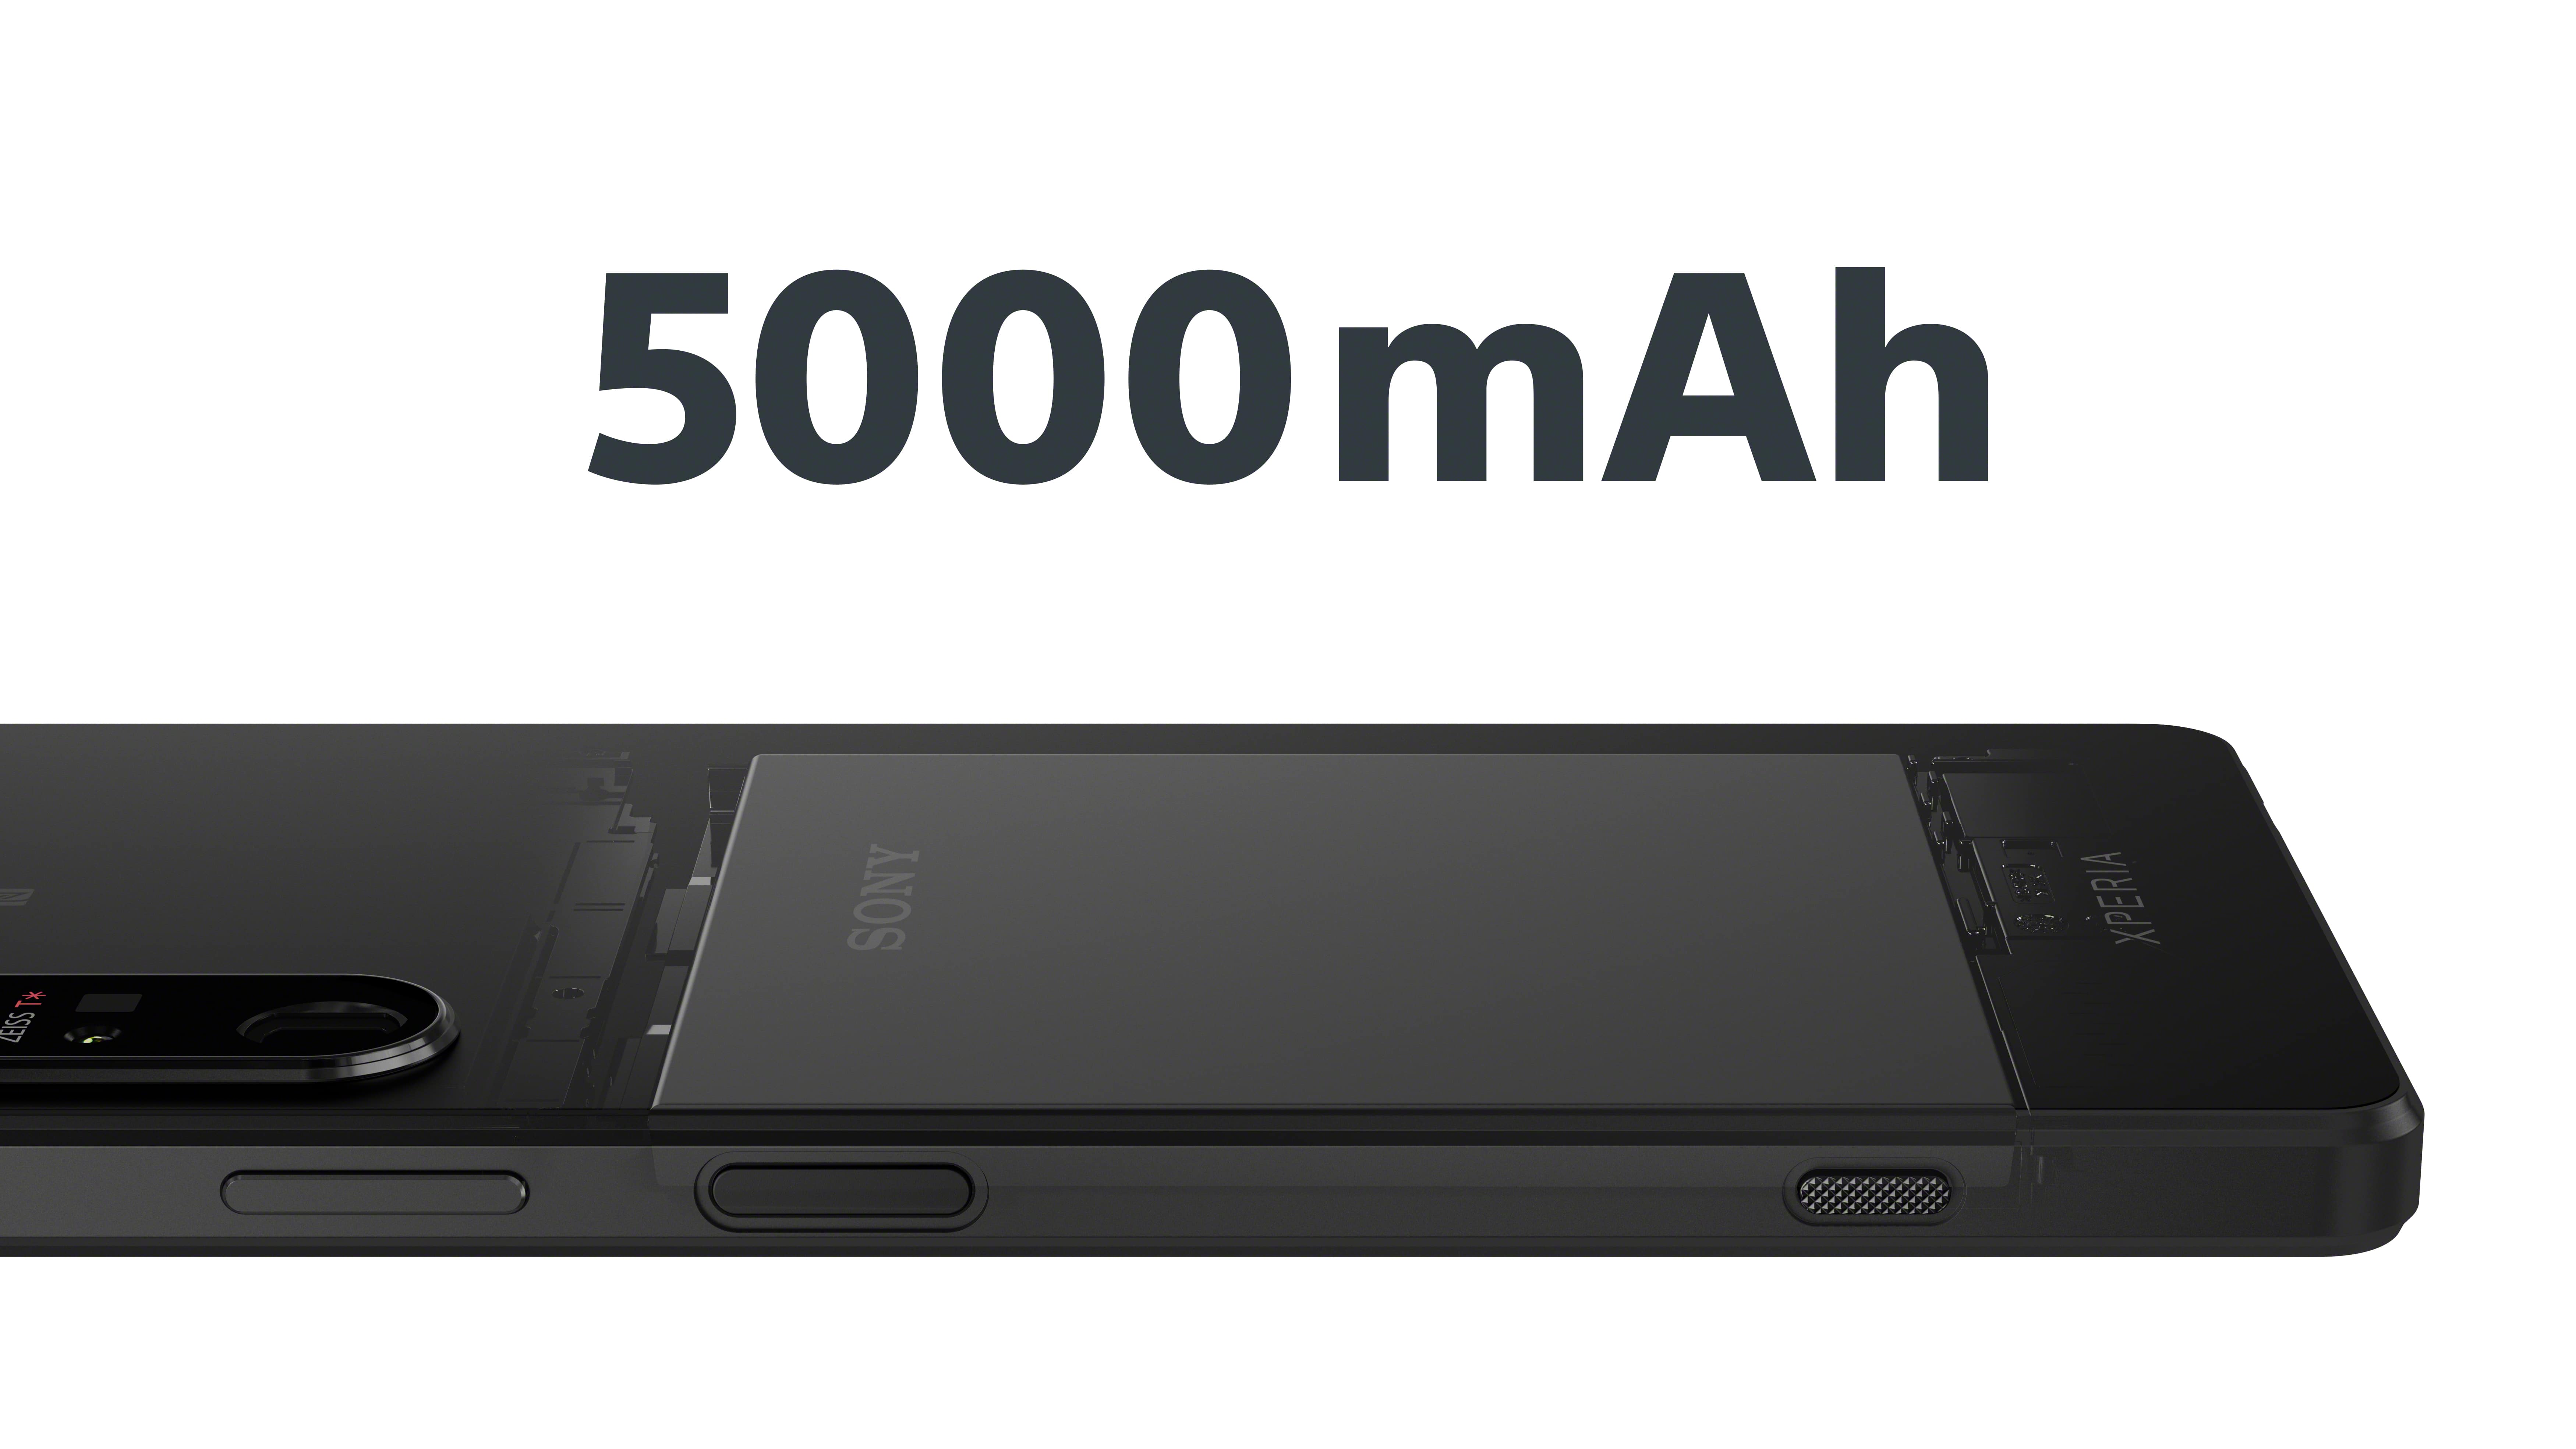 fest verbauter akku eines sony xperia smartphones mit 5000 mAh